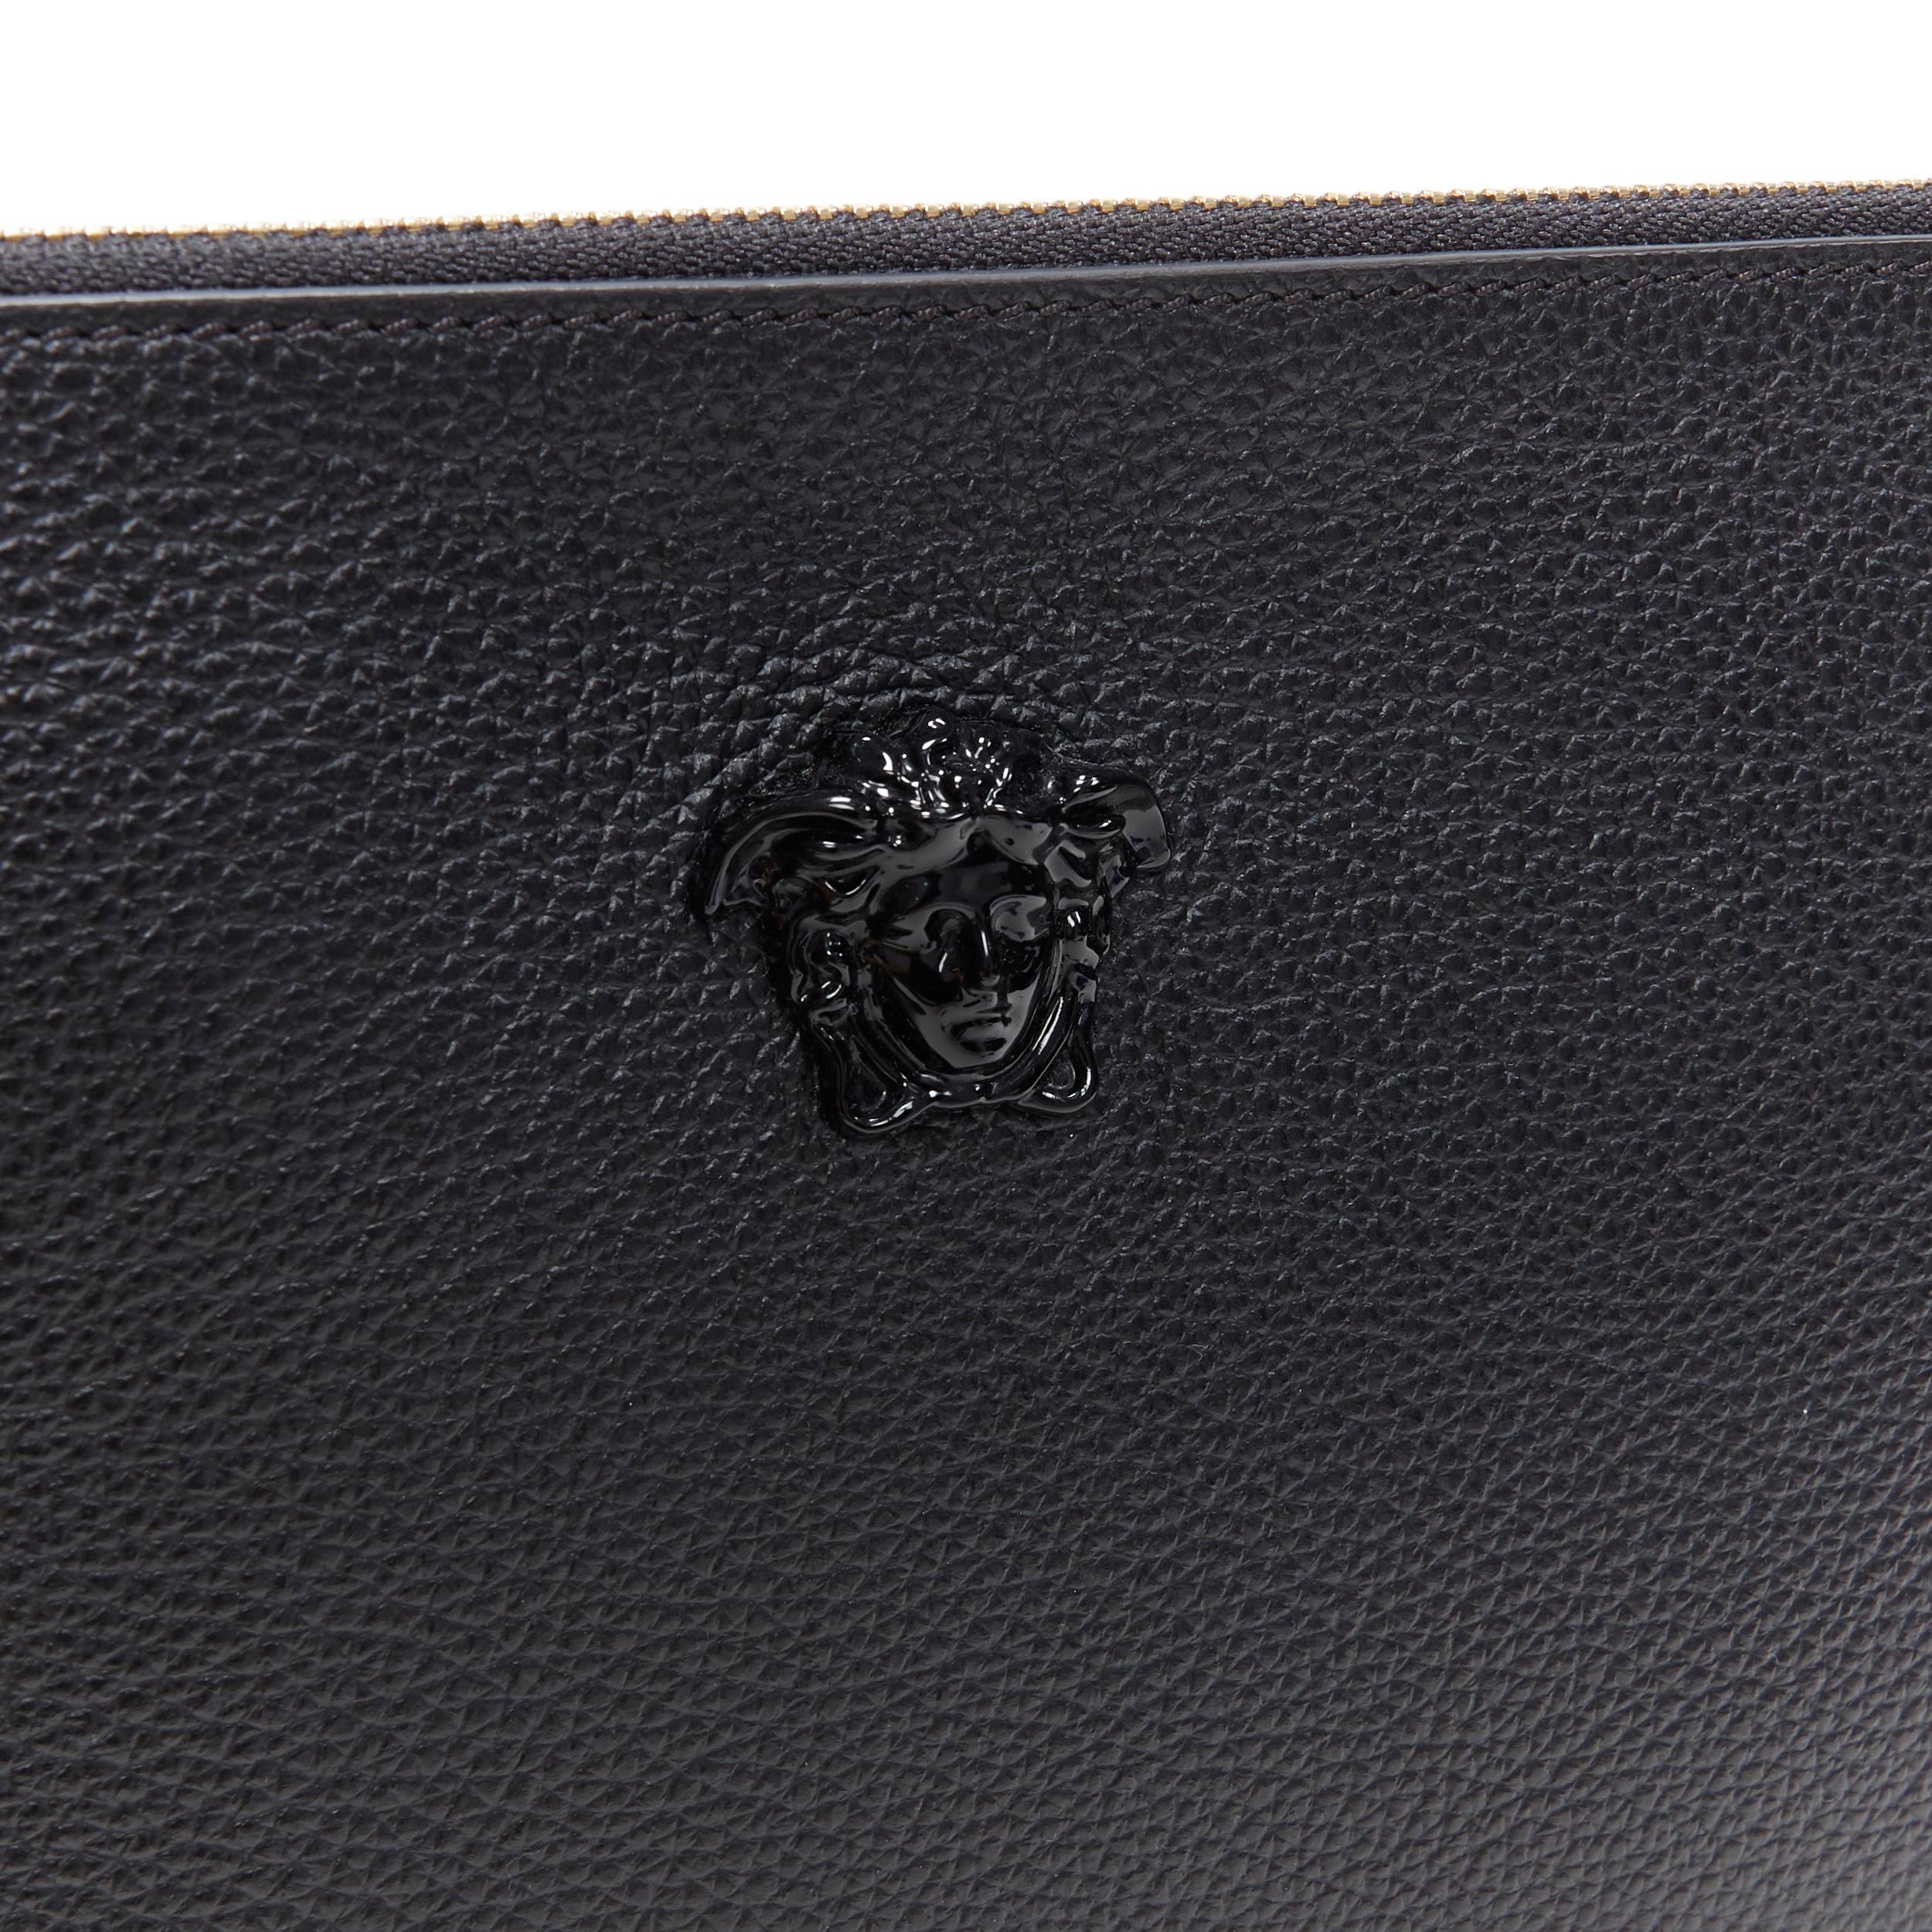 Black new VERSACE Palazzo Medusa black pebble leather top zip wristlet clutch bag